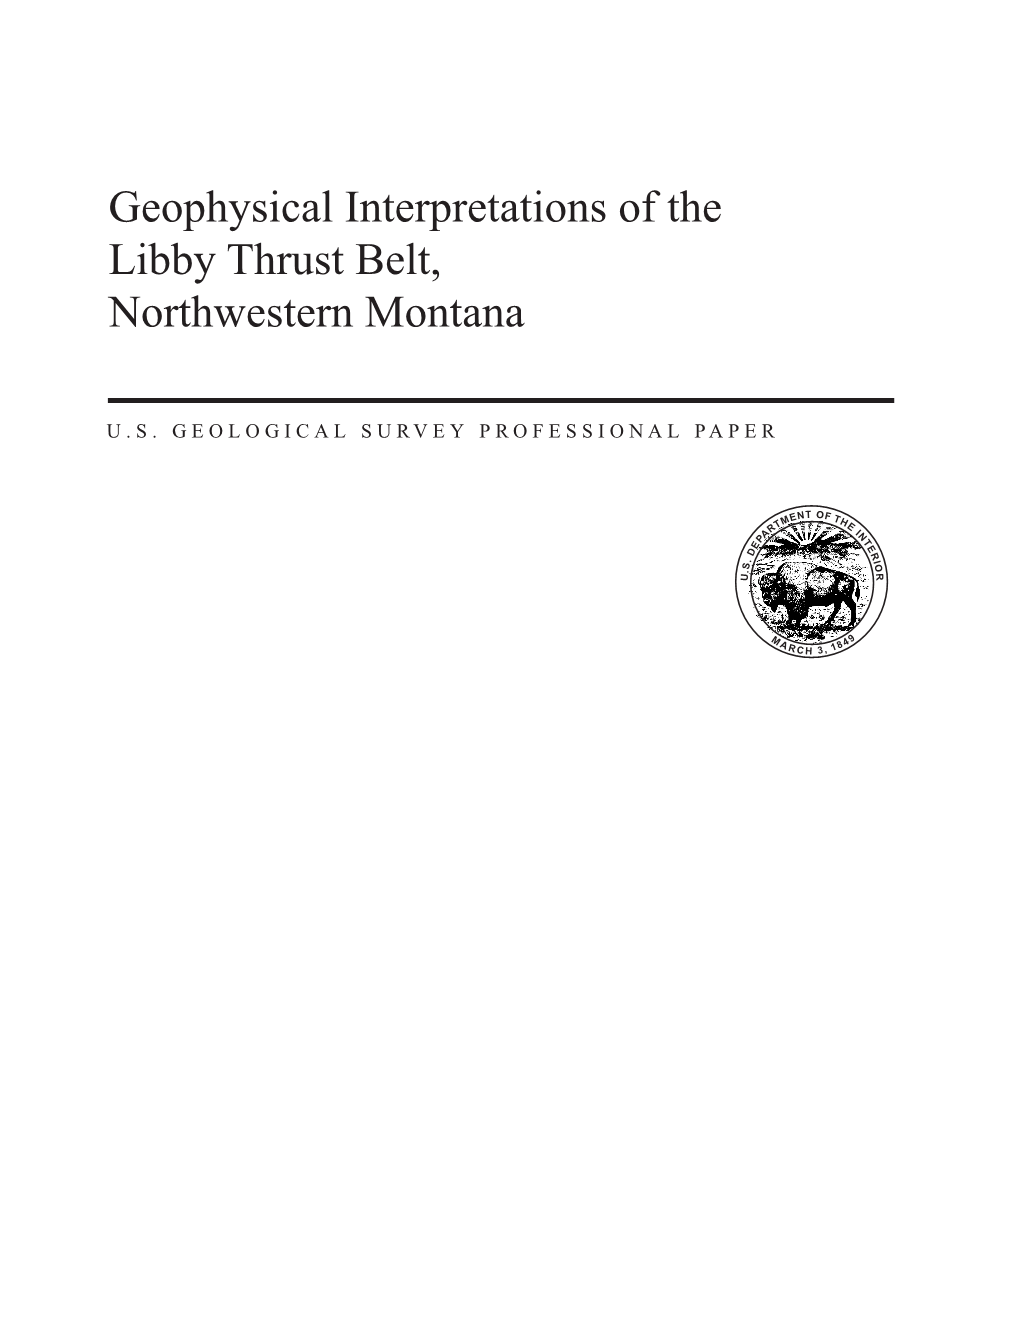 Geophysical Interpretations of the Libby Thrust Belt, Northwestern Montana